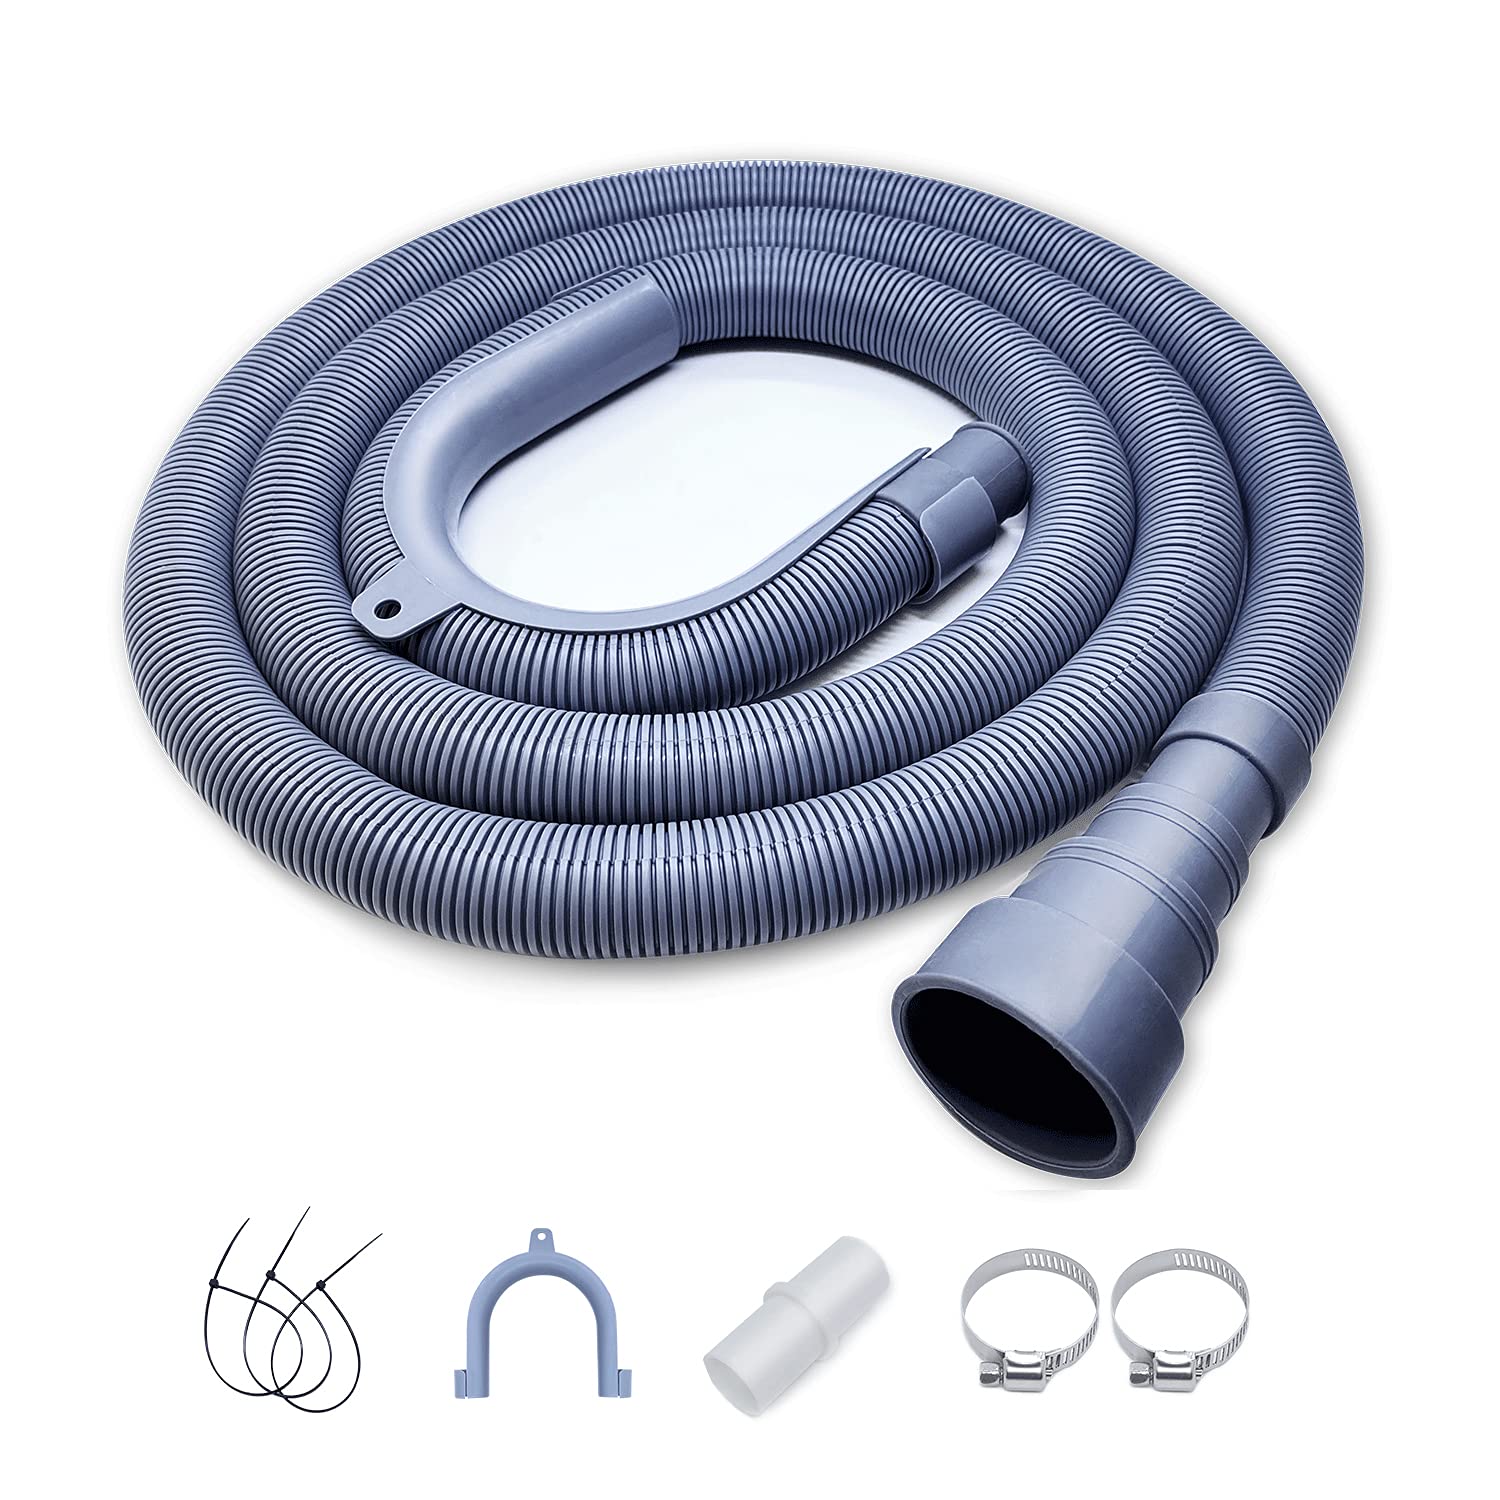 Washing machine drain hose extension插图